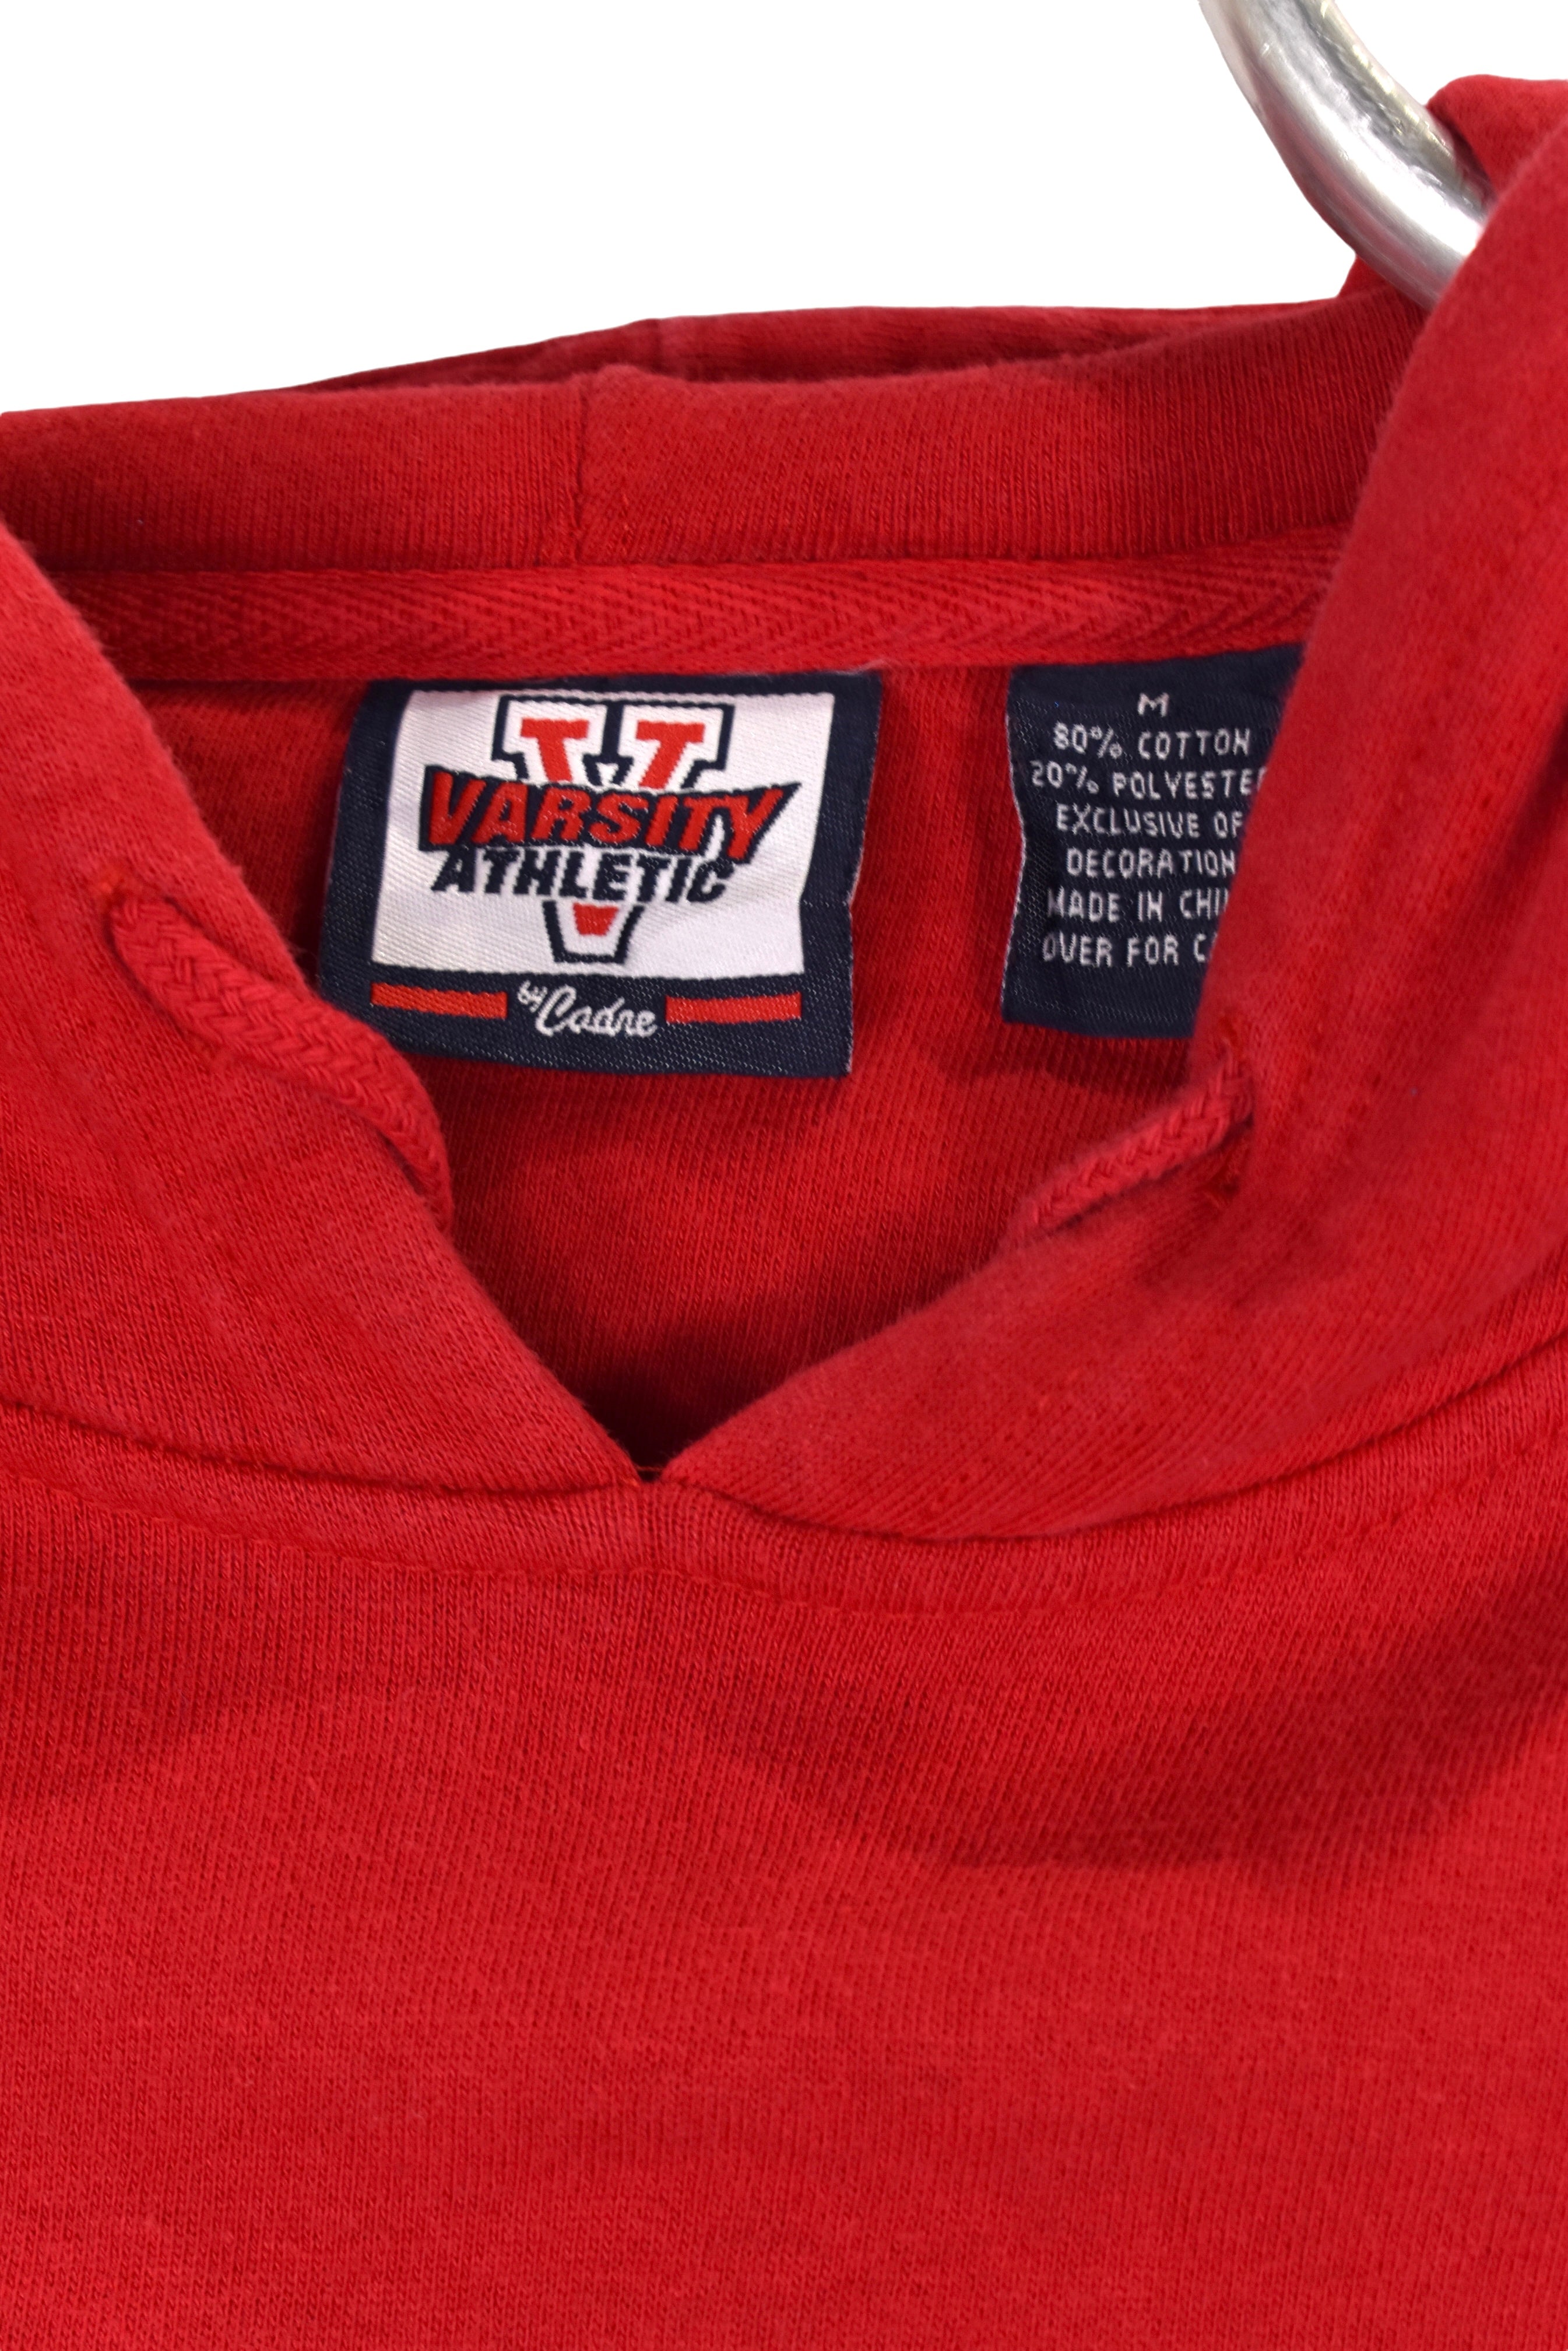 Vintage Wisconsin University hoodie (M), red embroidered sweatshirt